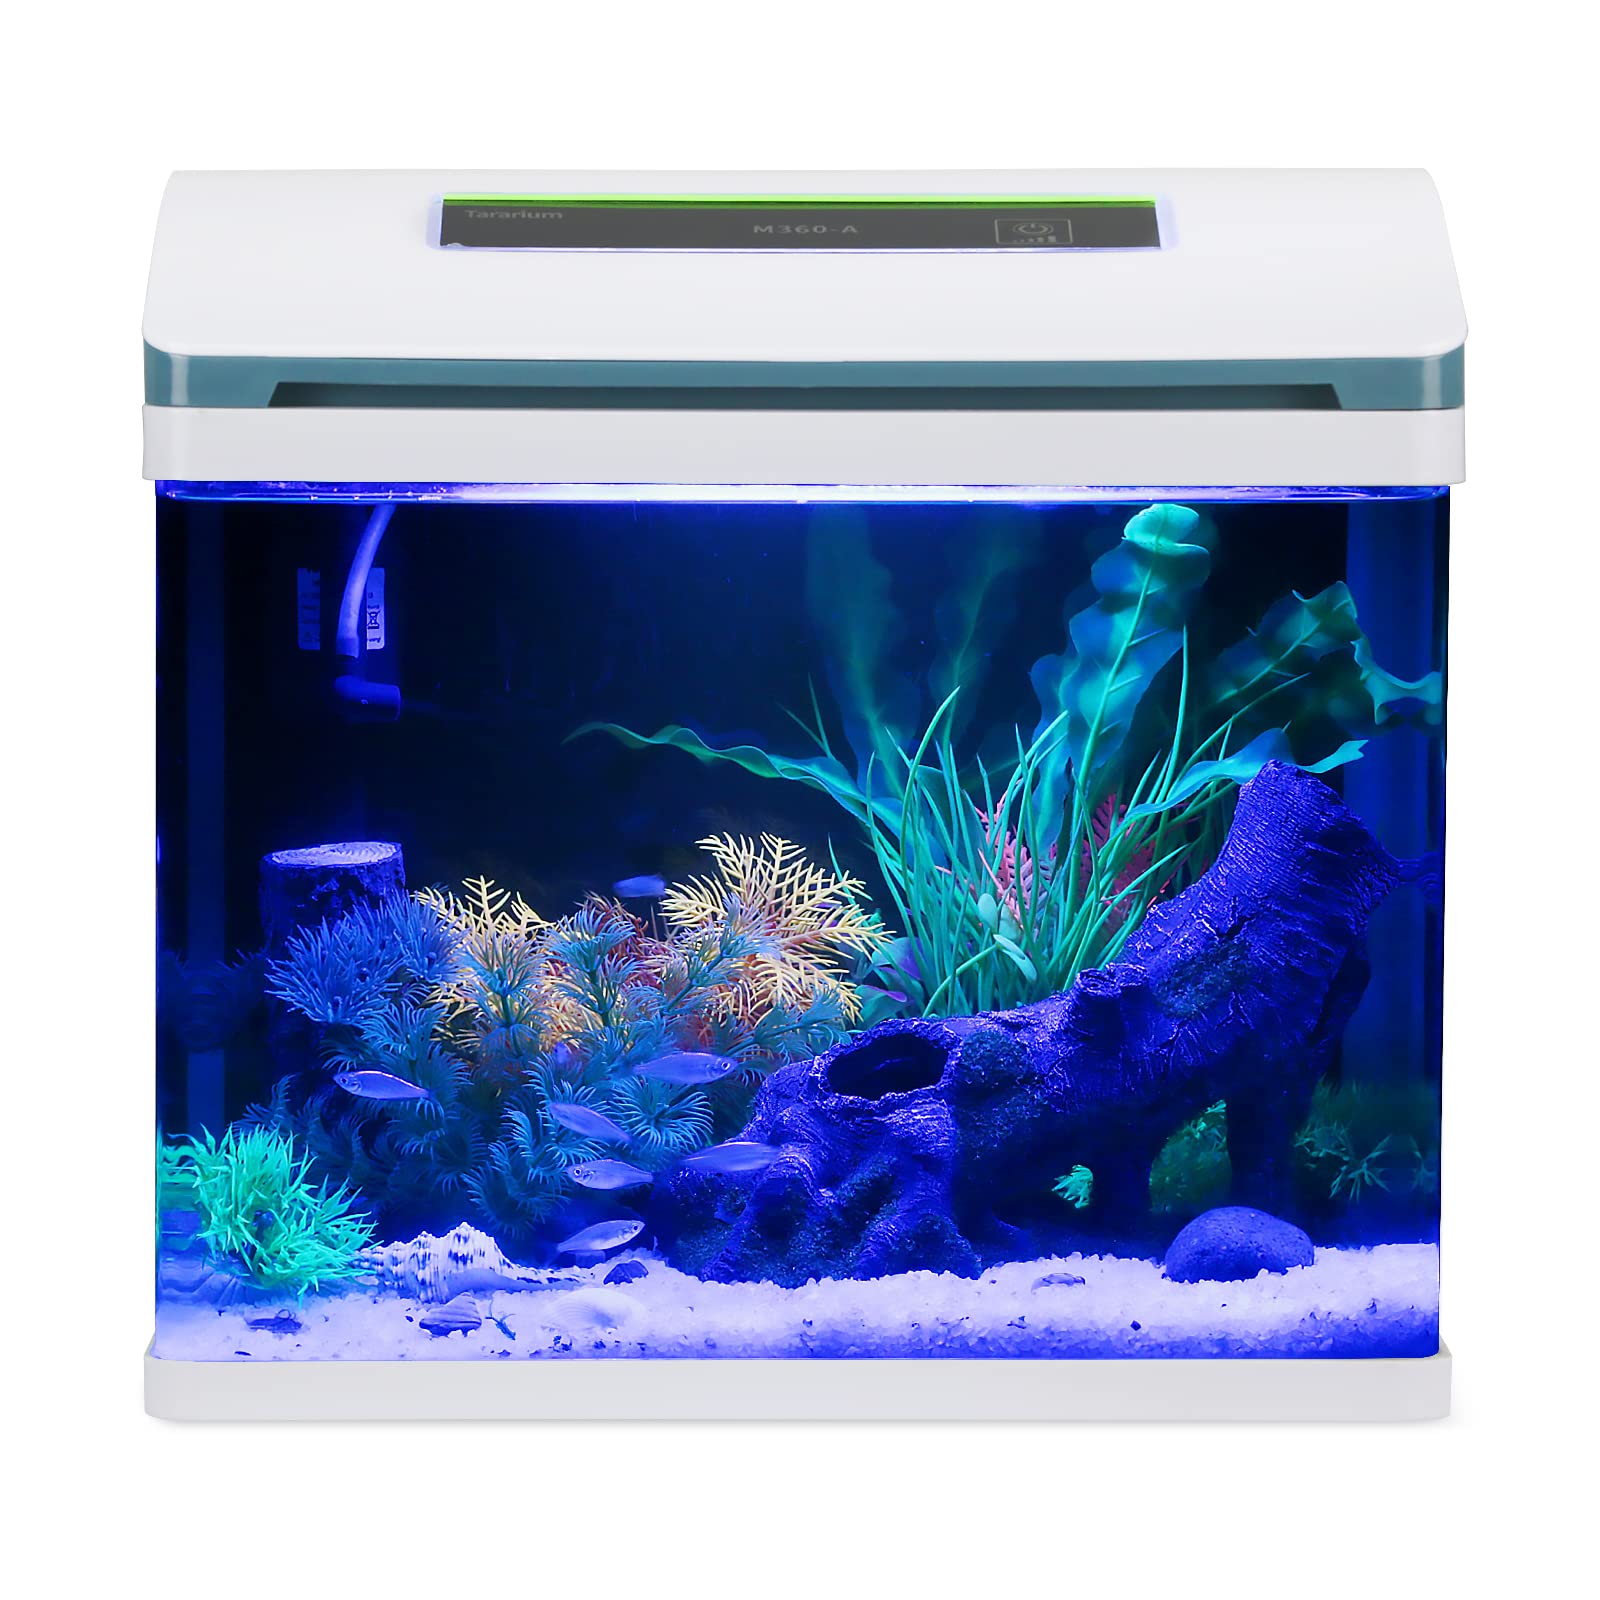 Brand Name: Glass Aquarium Starter Kits - Self Cleaning 2 Gallon Tank